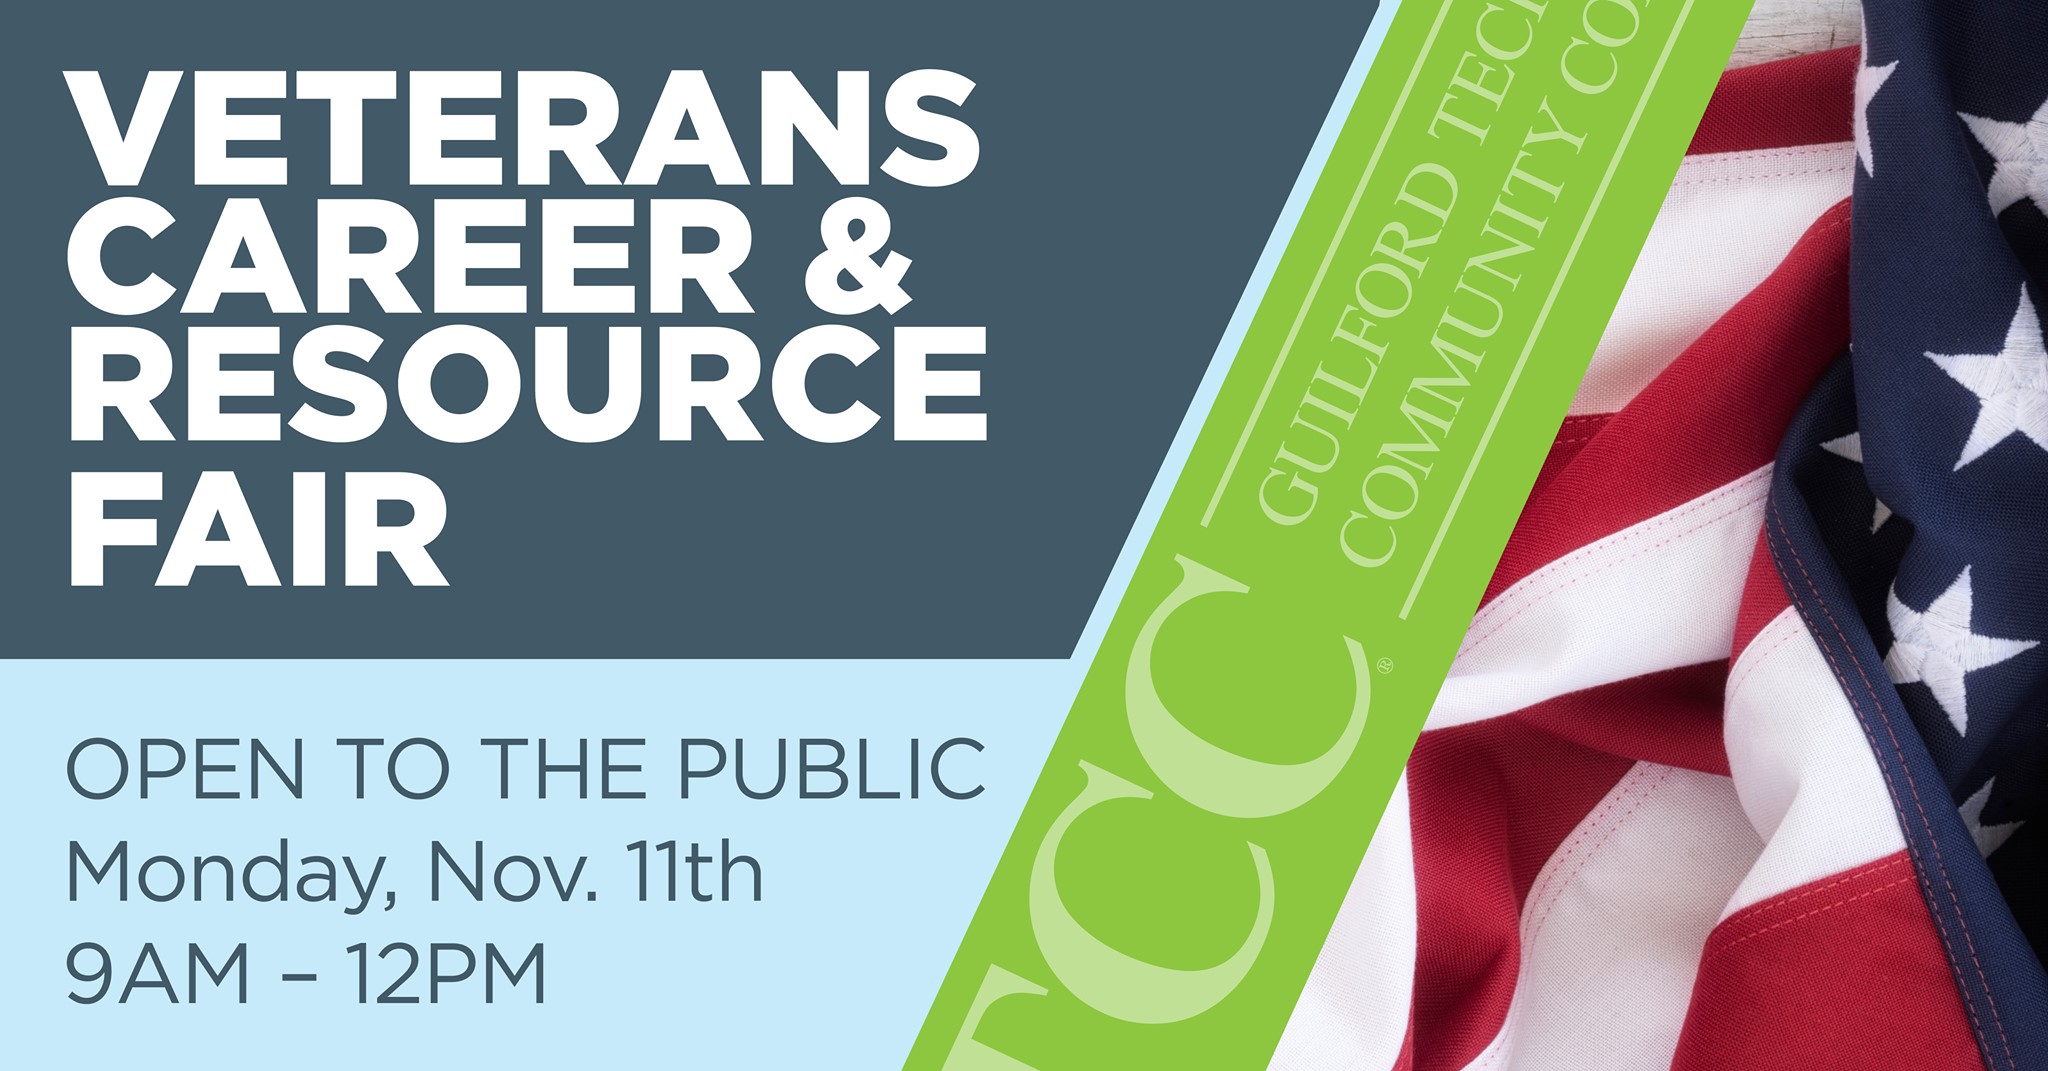 GTCC to Host Veterans Career and Resource Fair Nov. 11